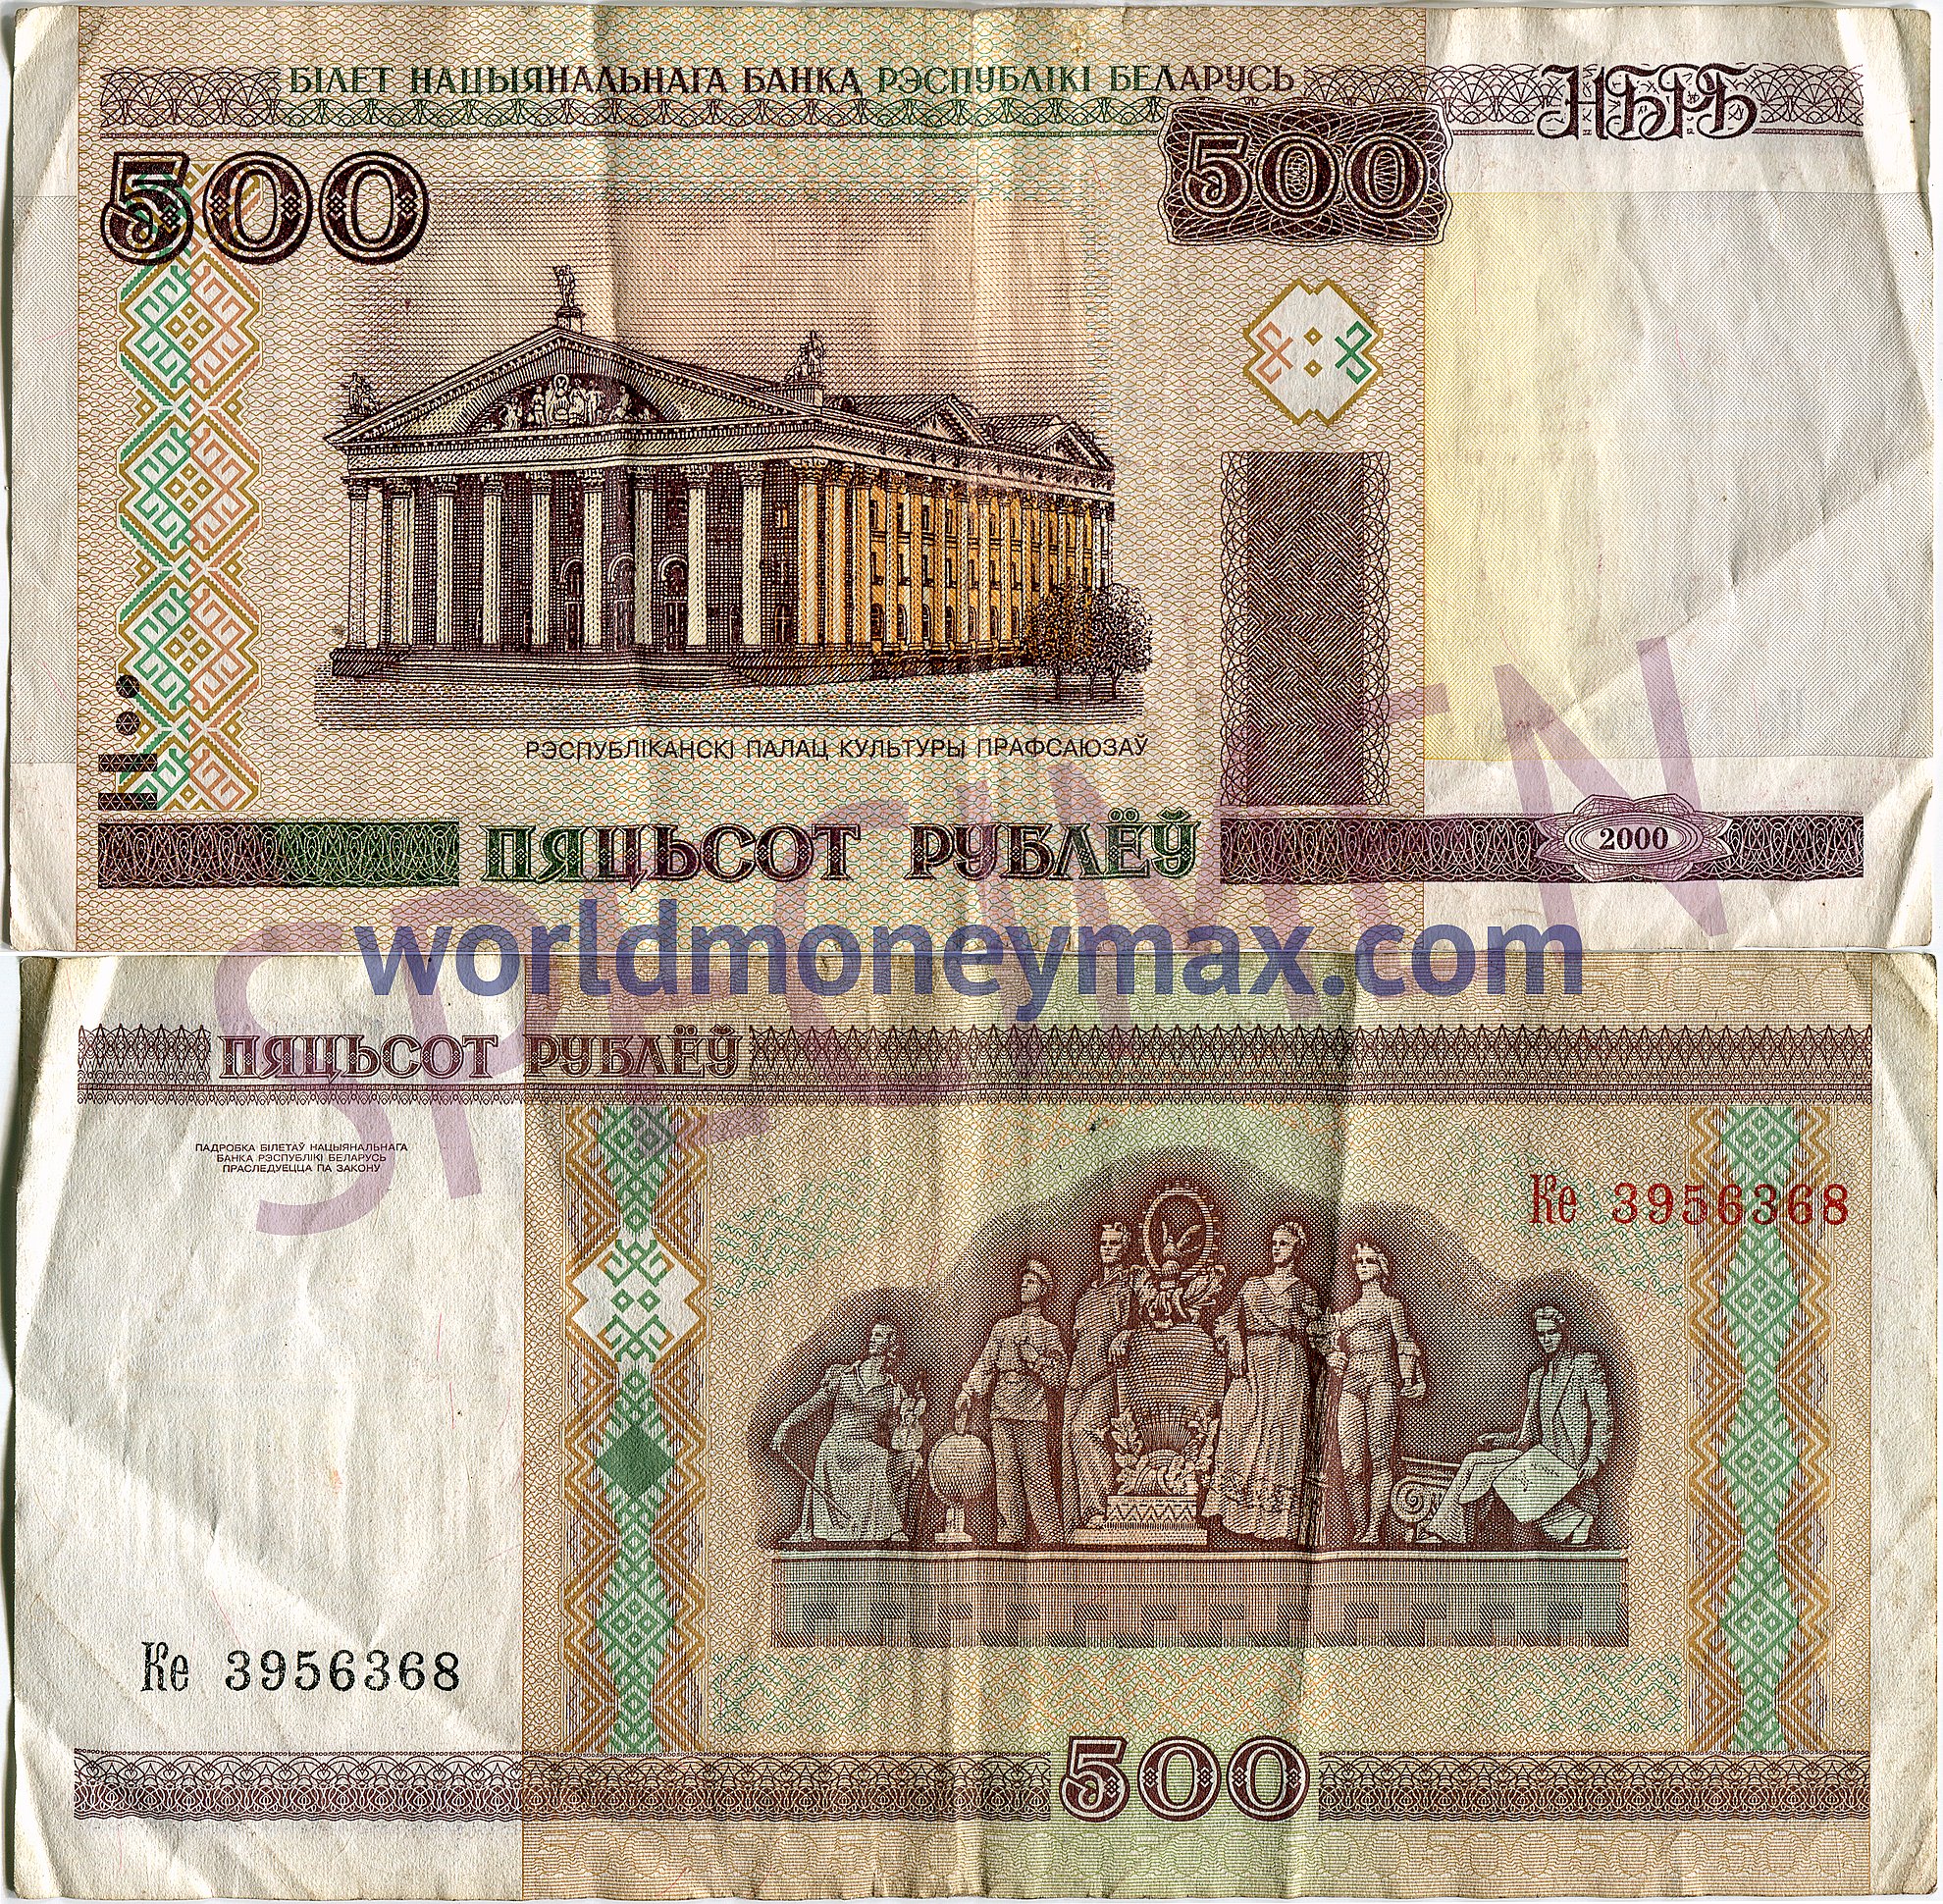 Belarus 500 Ruble 2000 banknote :: WorldMoneyMax.com